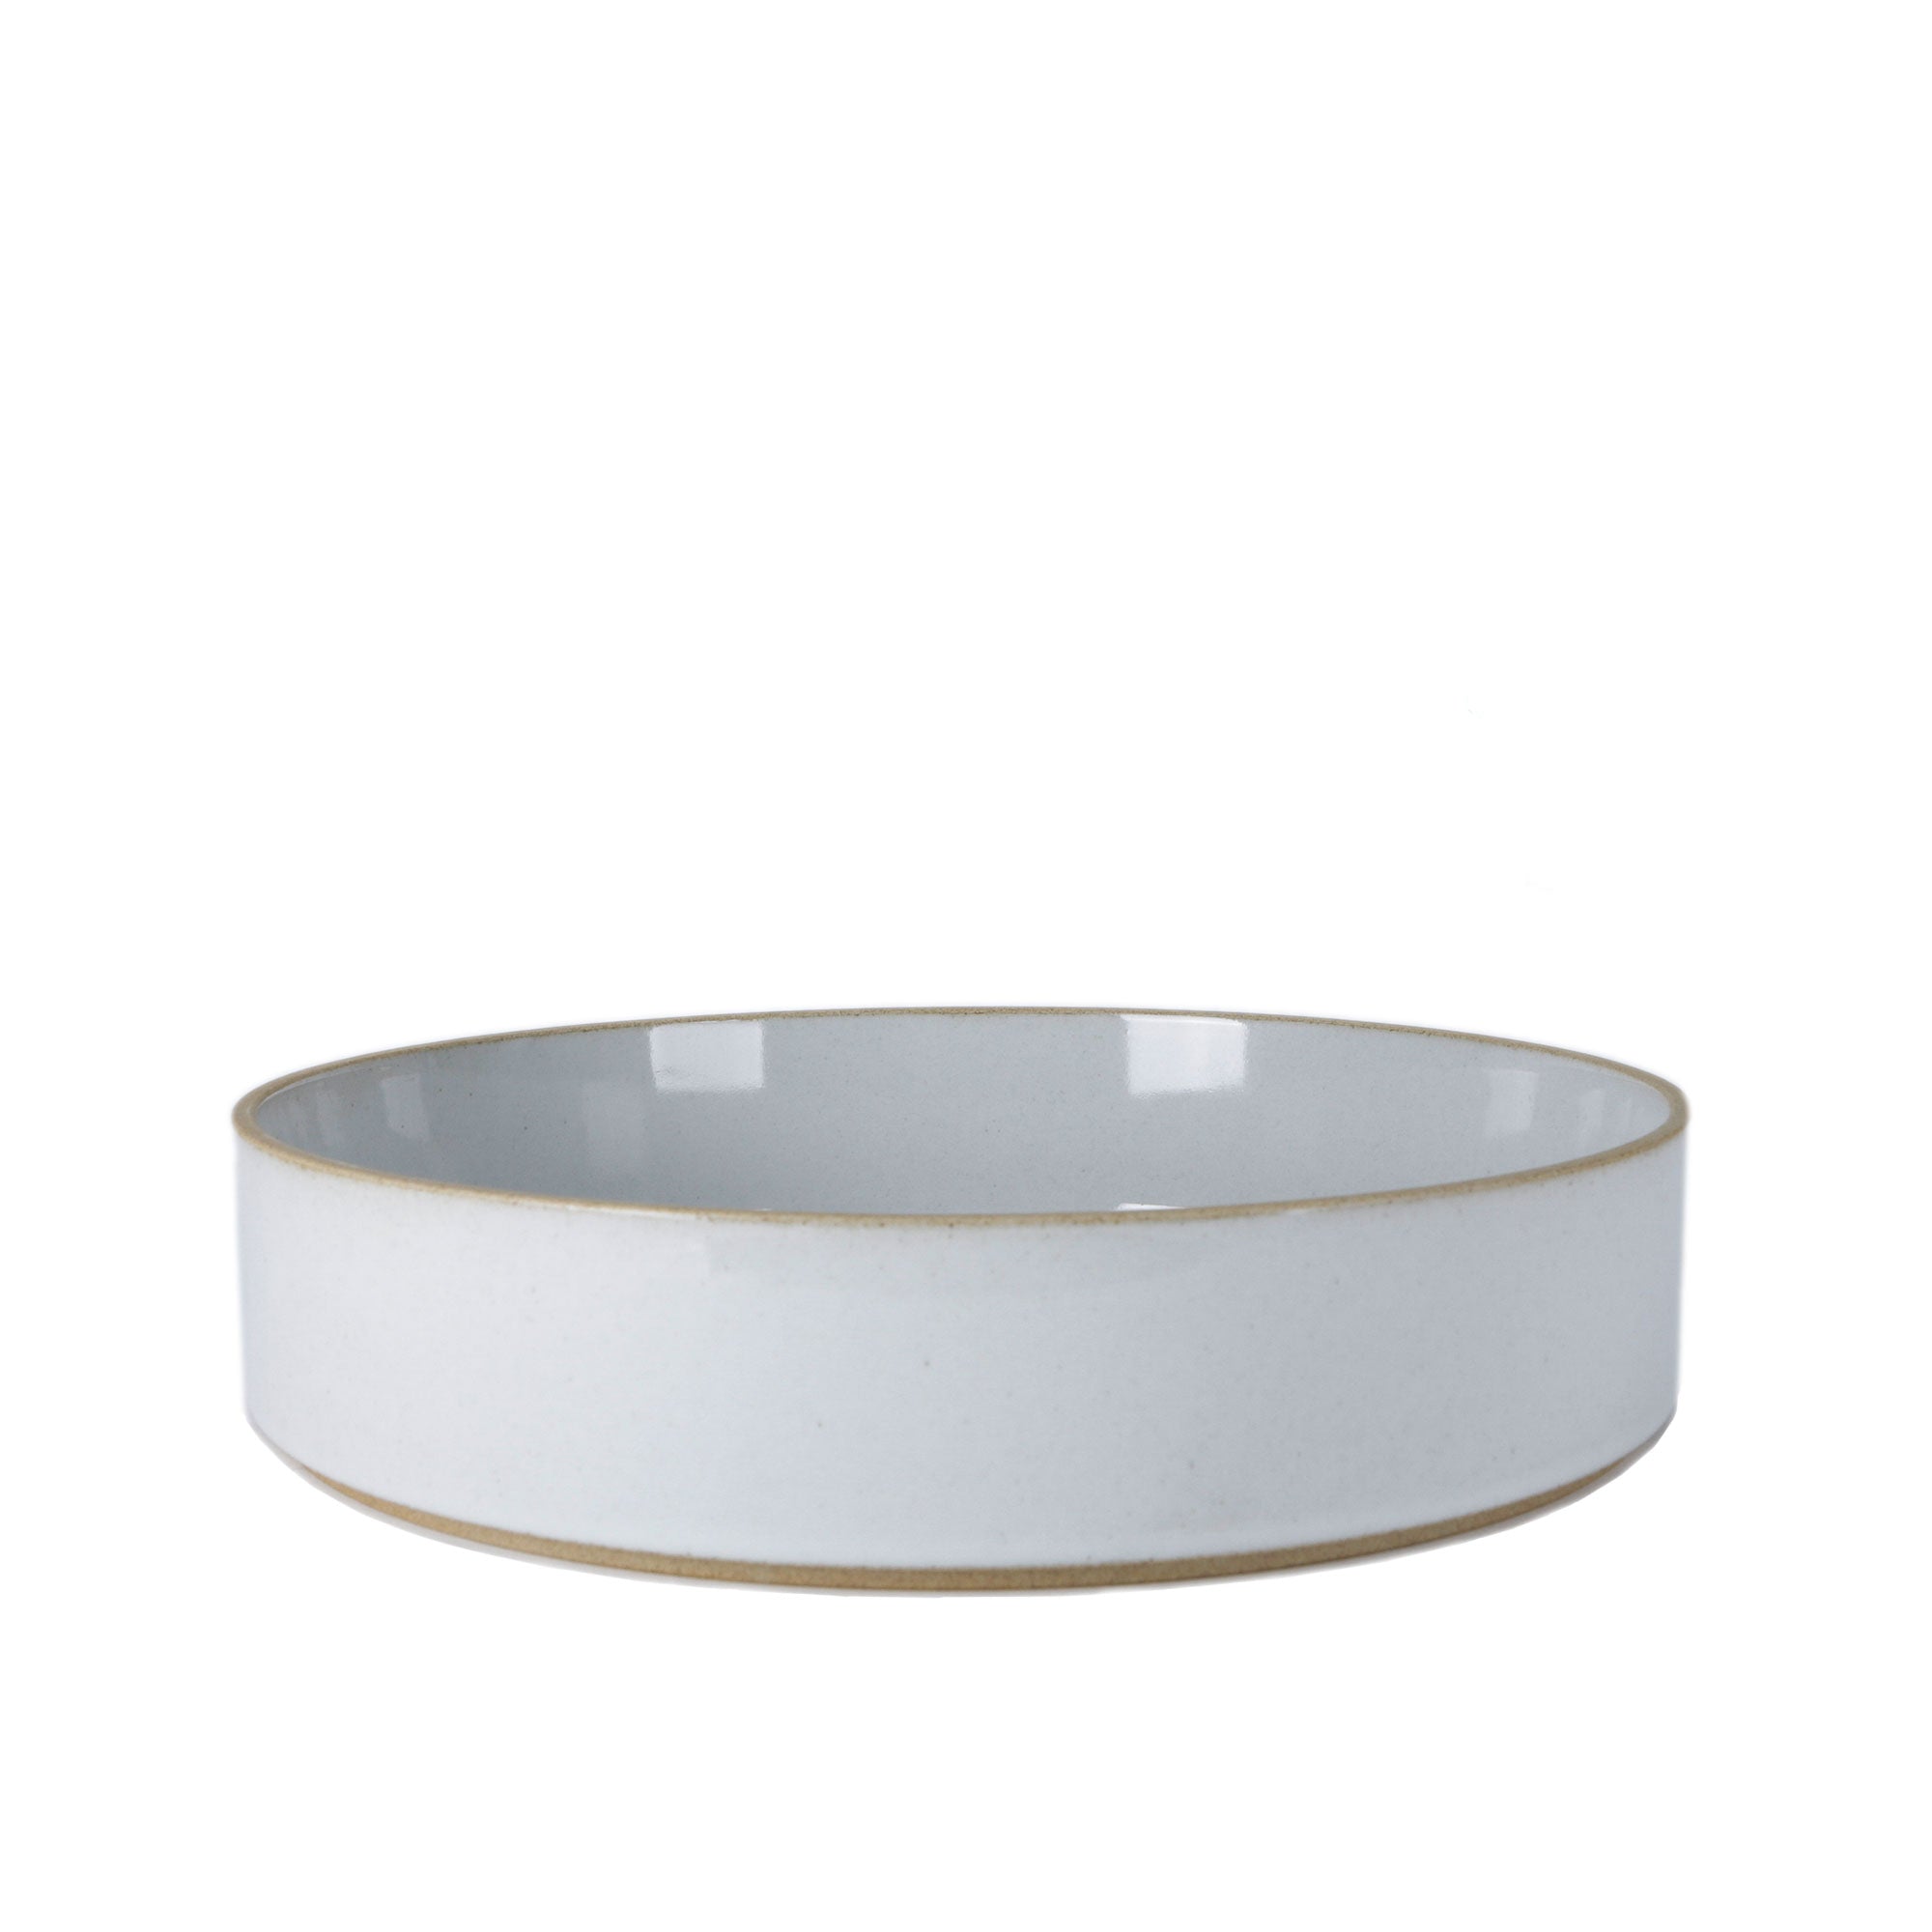 Gloss Gray Porcelain Ceramic Serving Bowl